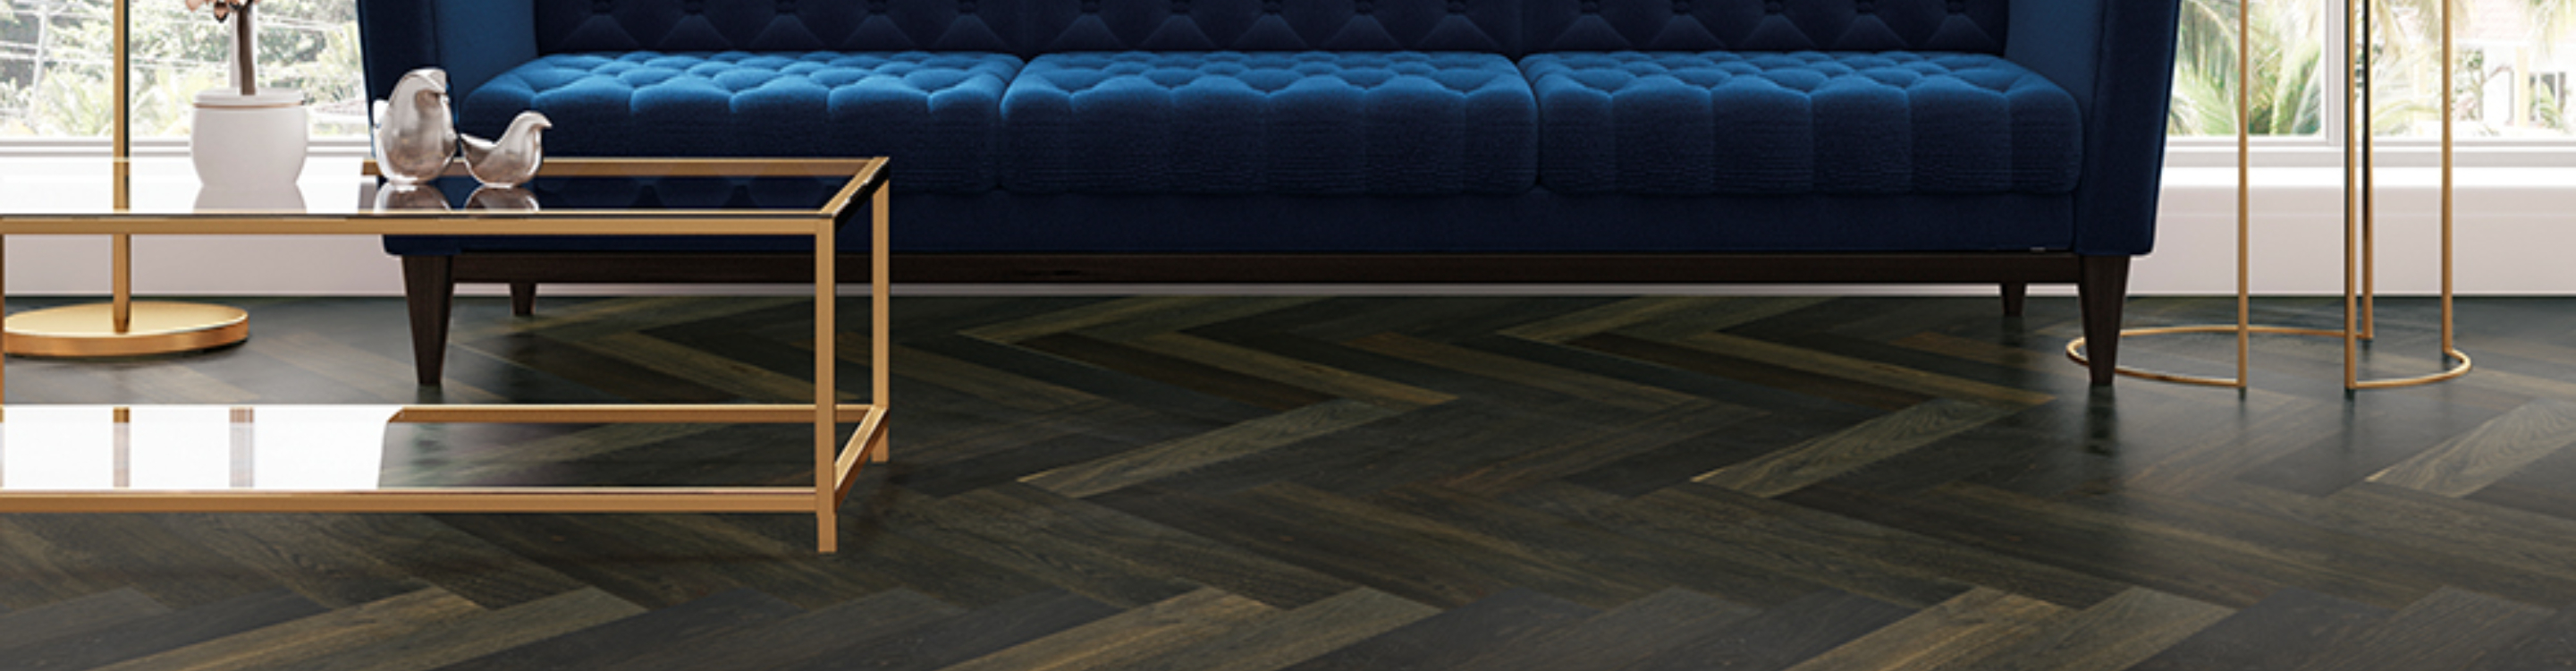 herringbone wood floor with blue velvet sofa